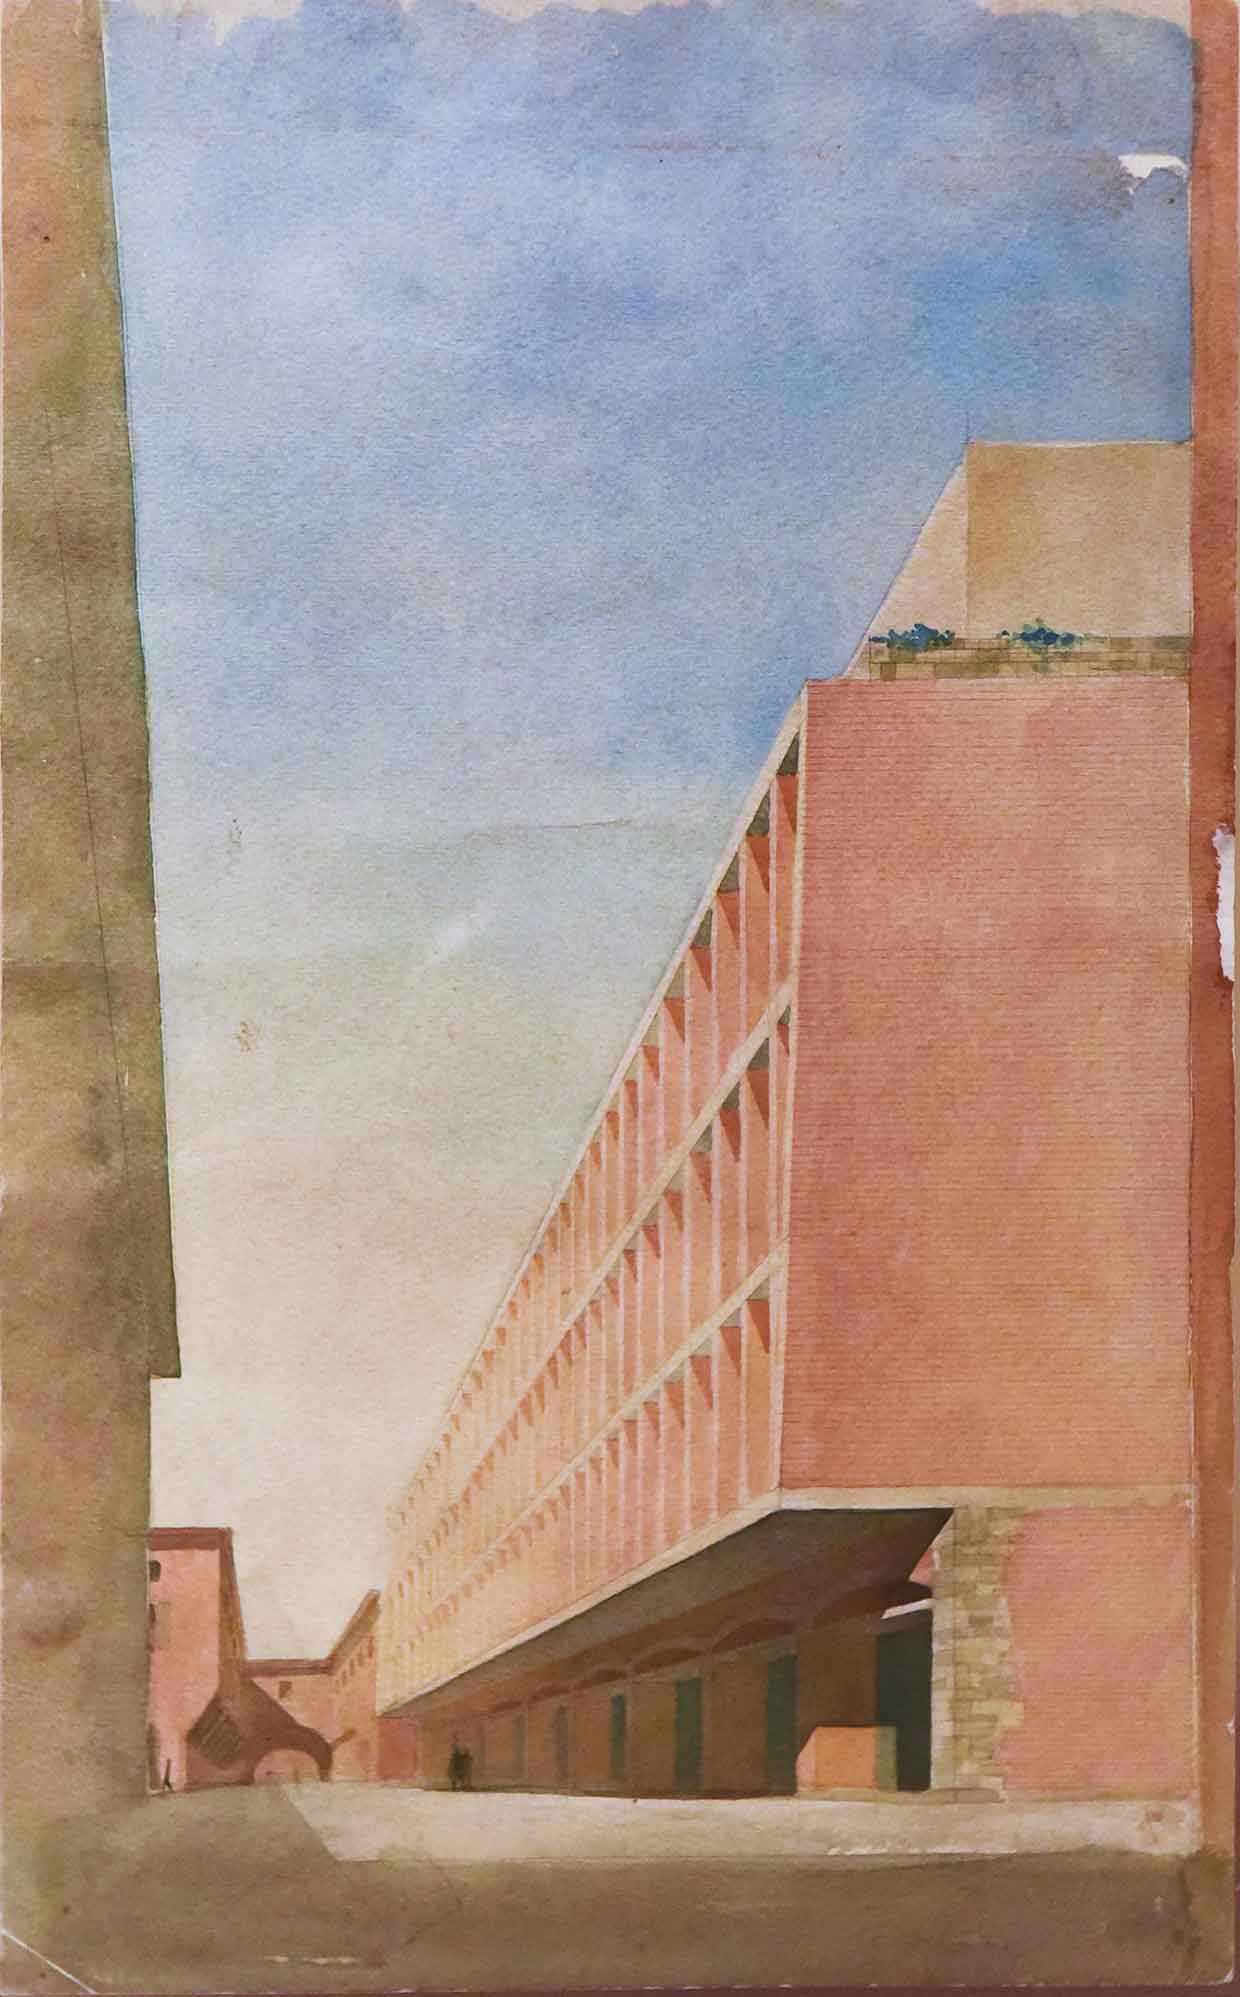 Galleria Cavour 1959 vista da via de’ Foscherari (Bologna), acquerello dell’Ingegner Giorgio Pizzighini